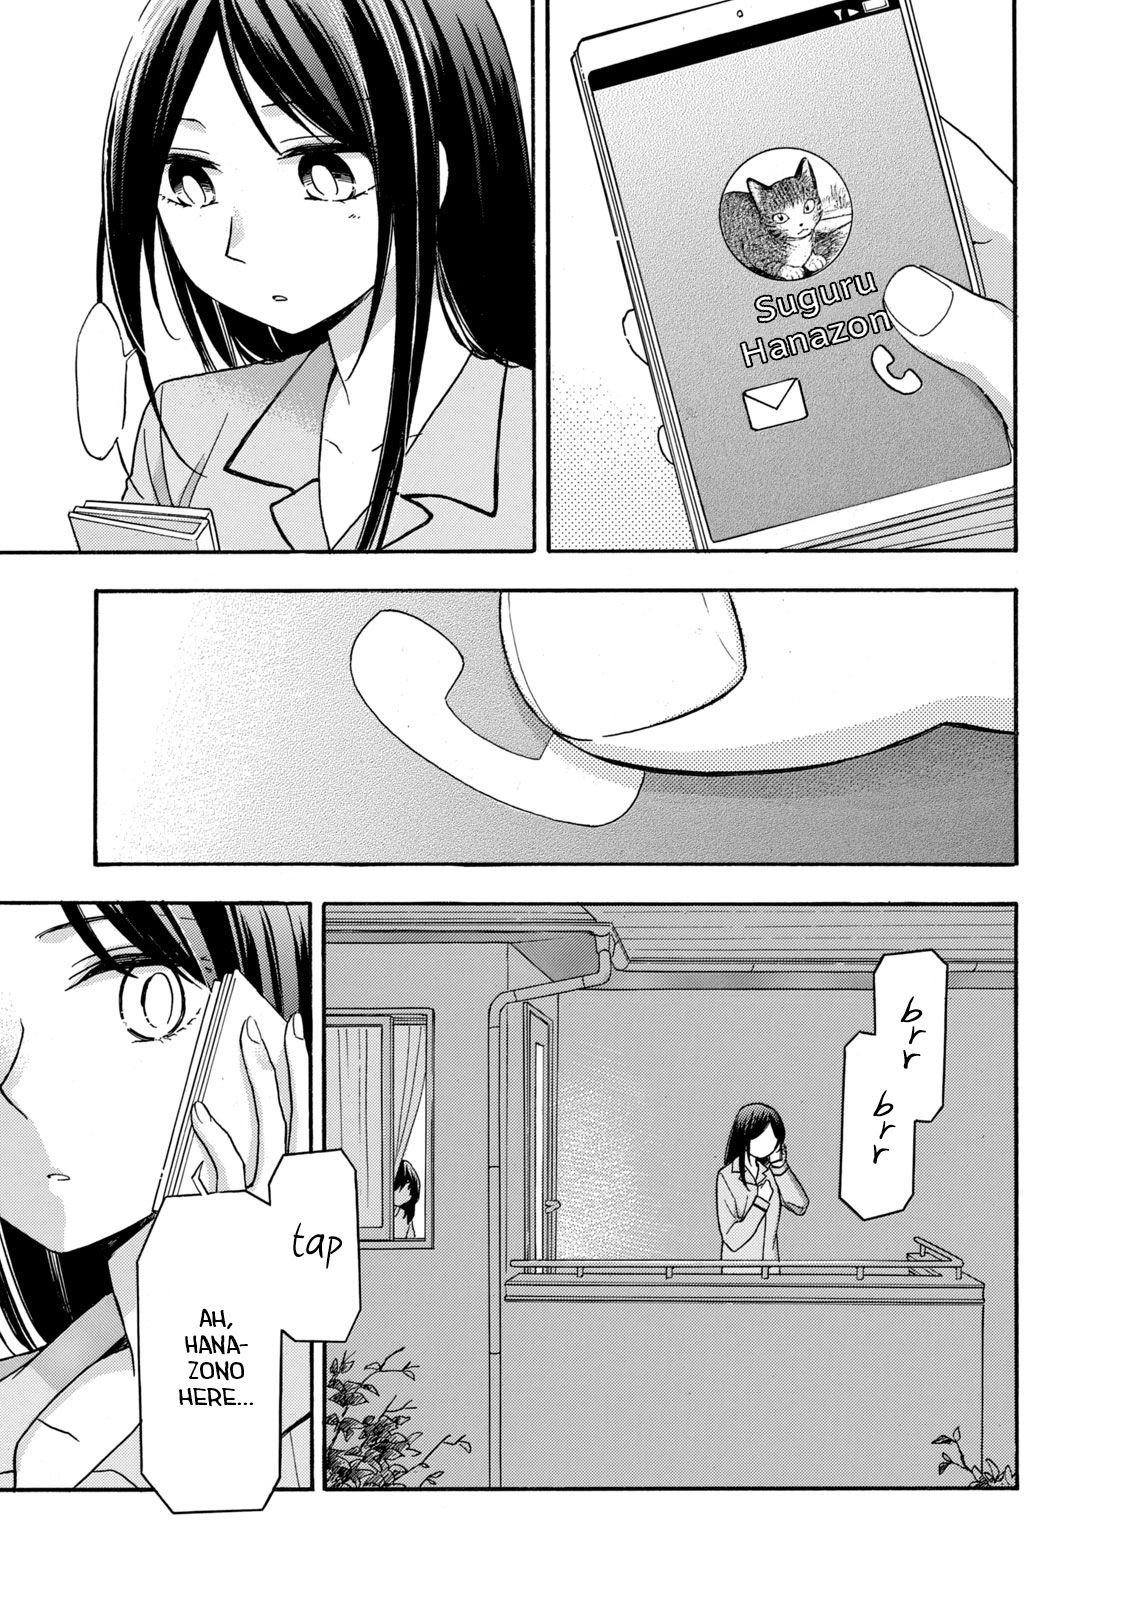 Hanazono And Kazoe's Bizarre After School Rendezvous - chapter 27 - #5